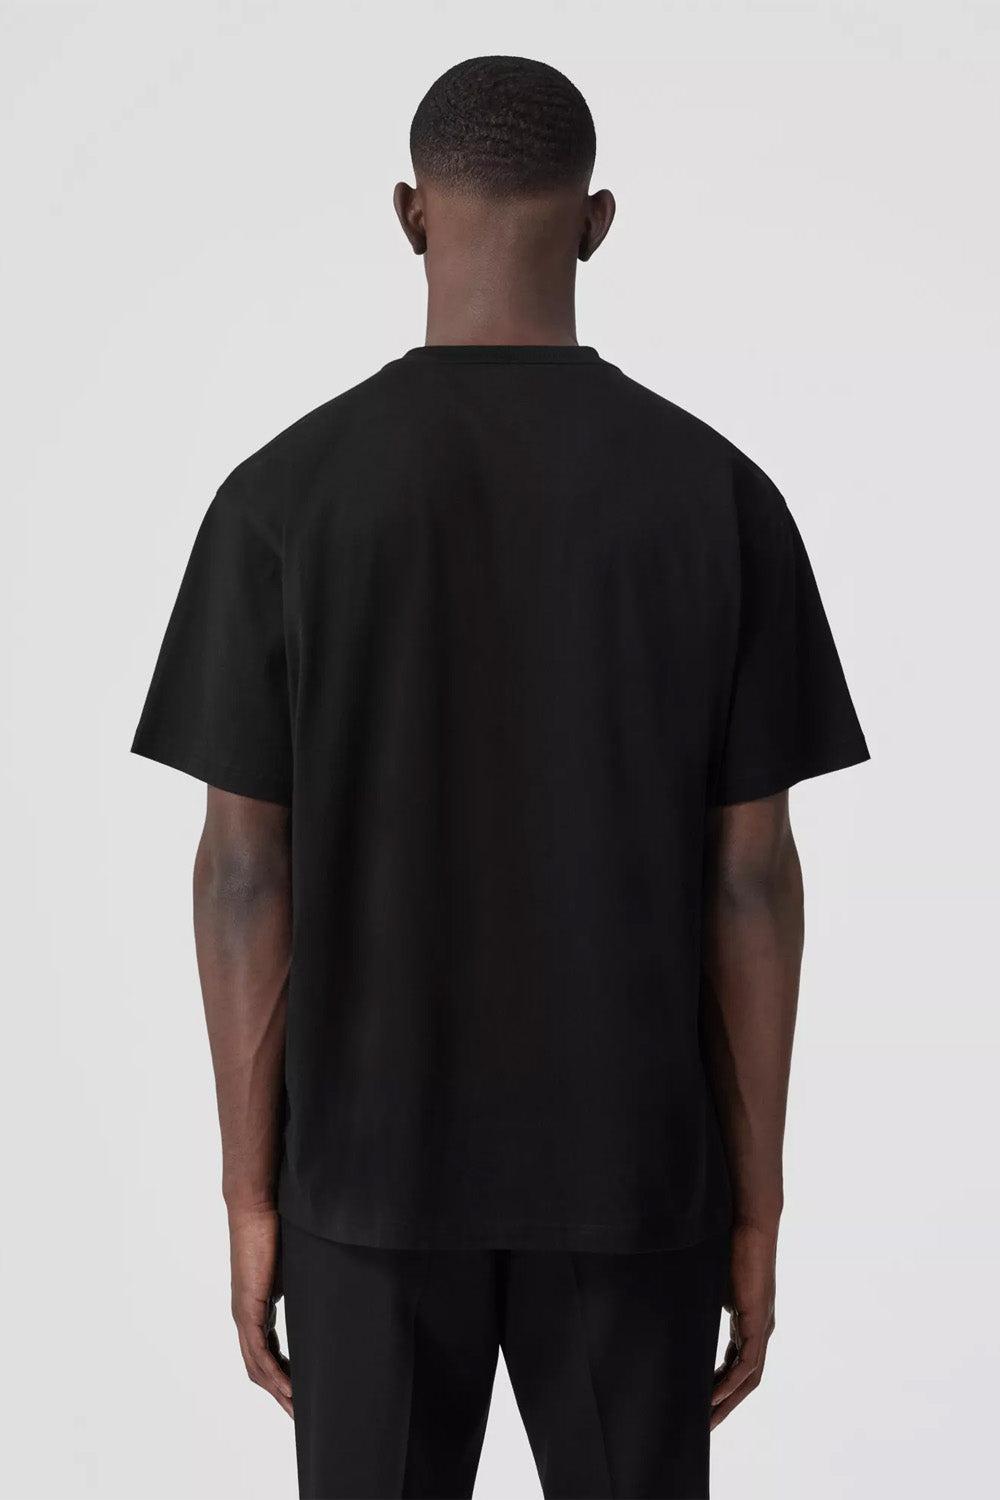 Burberry Logo Print Cotton Oversized T-shirt black